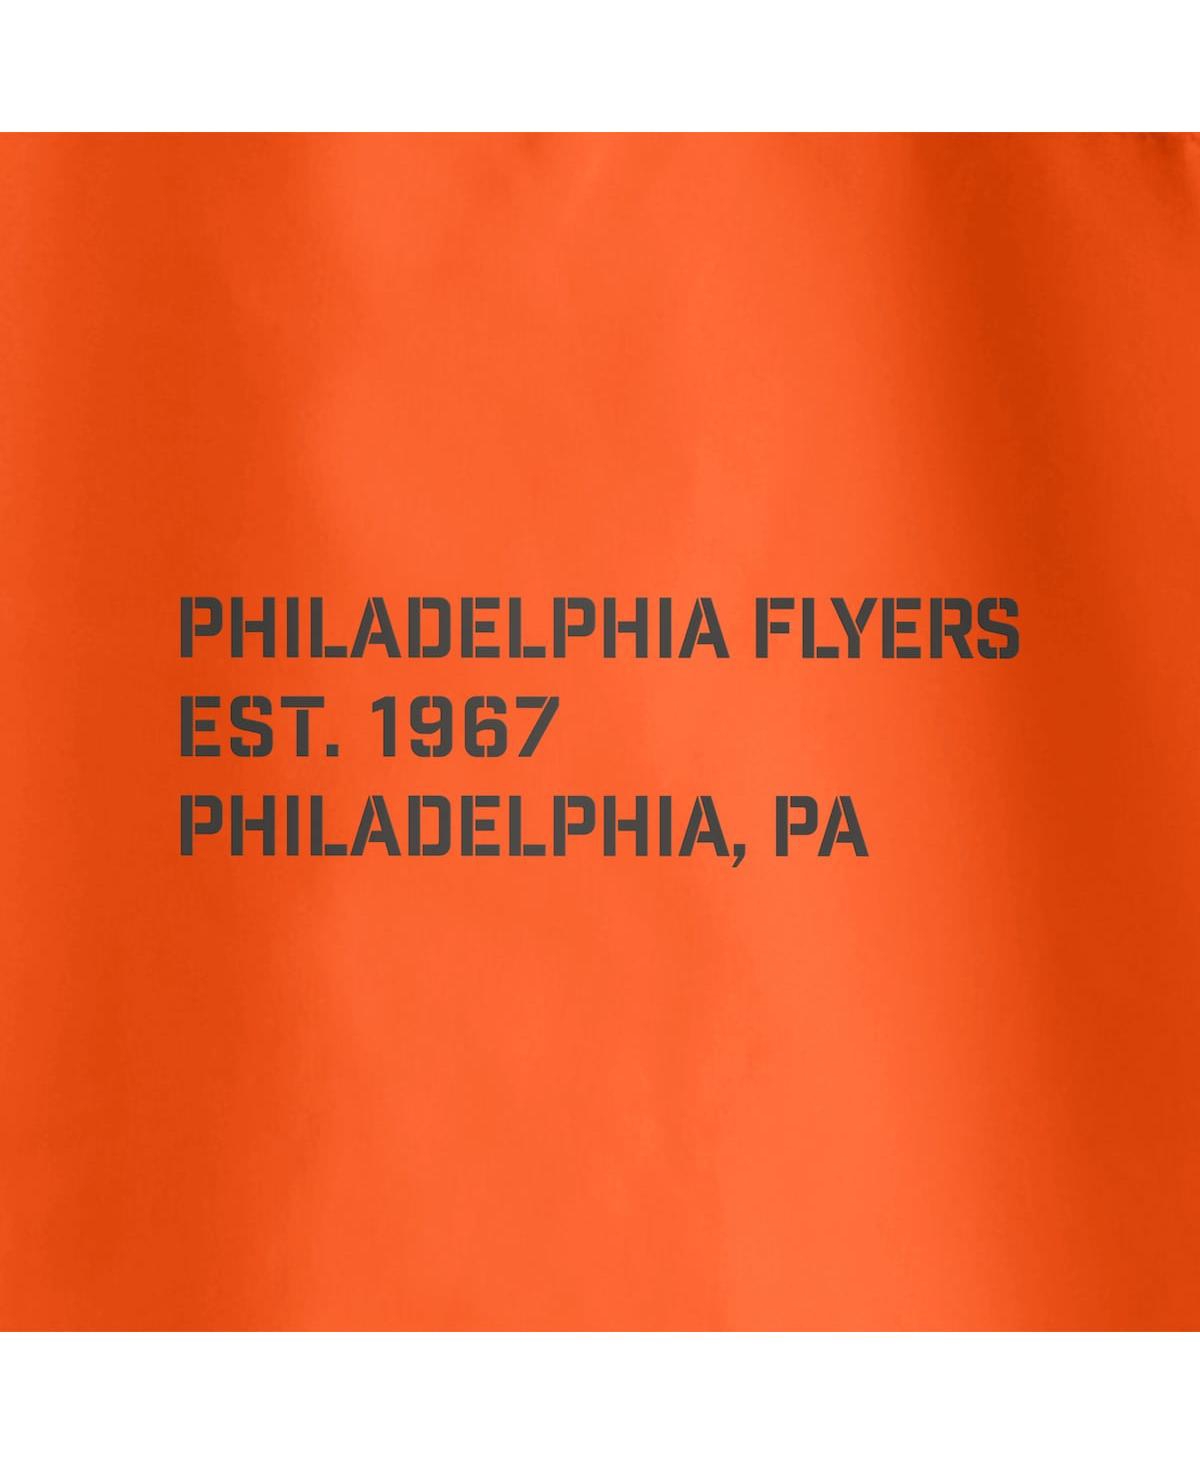 Shop Fanatics Men's  Black, Orange Philadelphia Flyers Thrill Seeker Anorak Half-zip Jacket In Black,orange